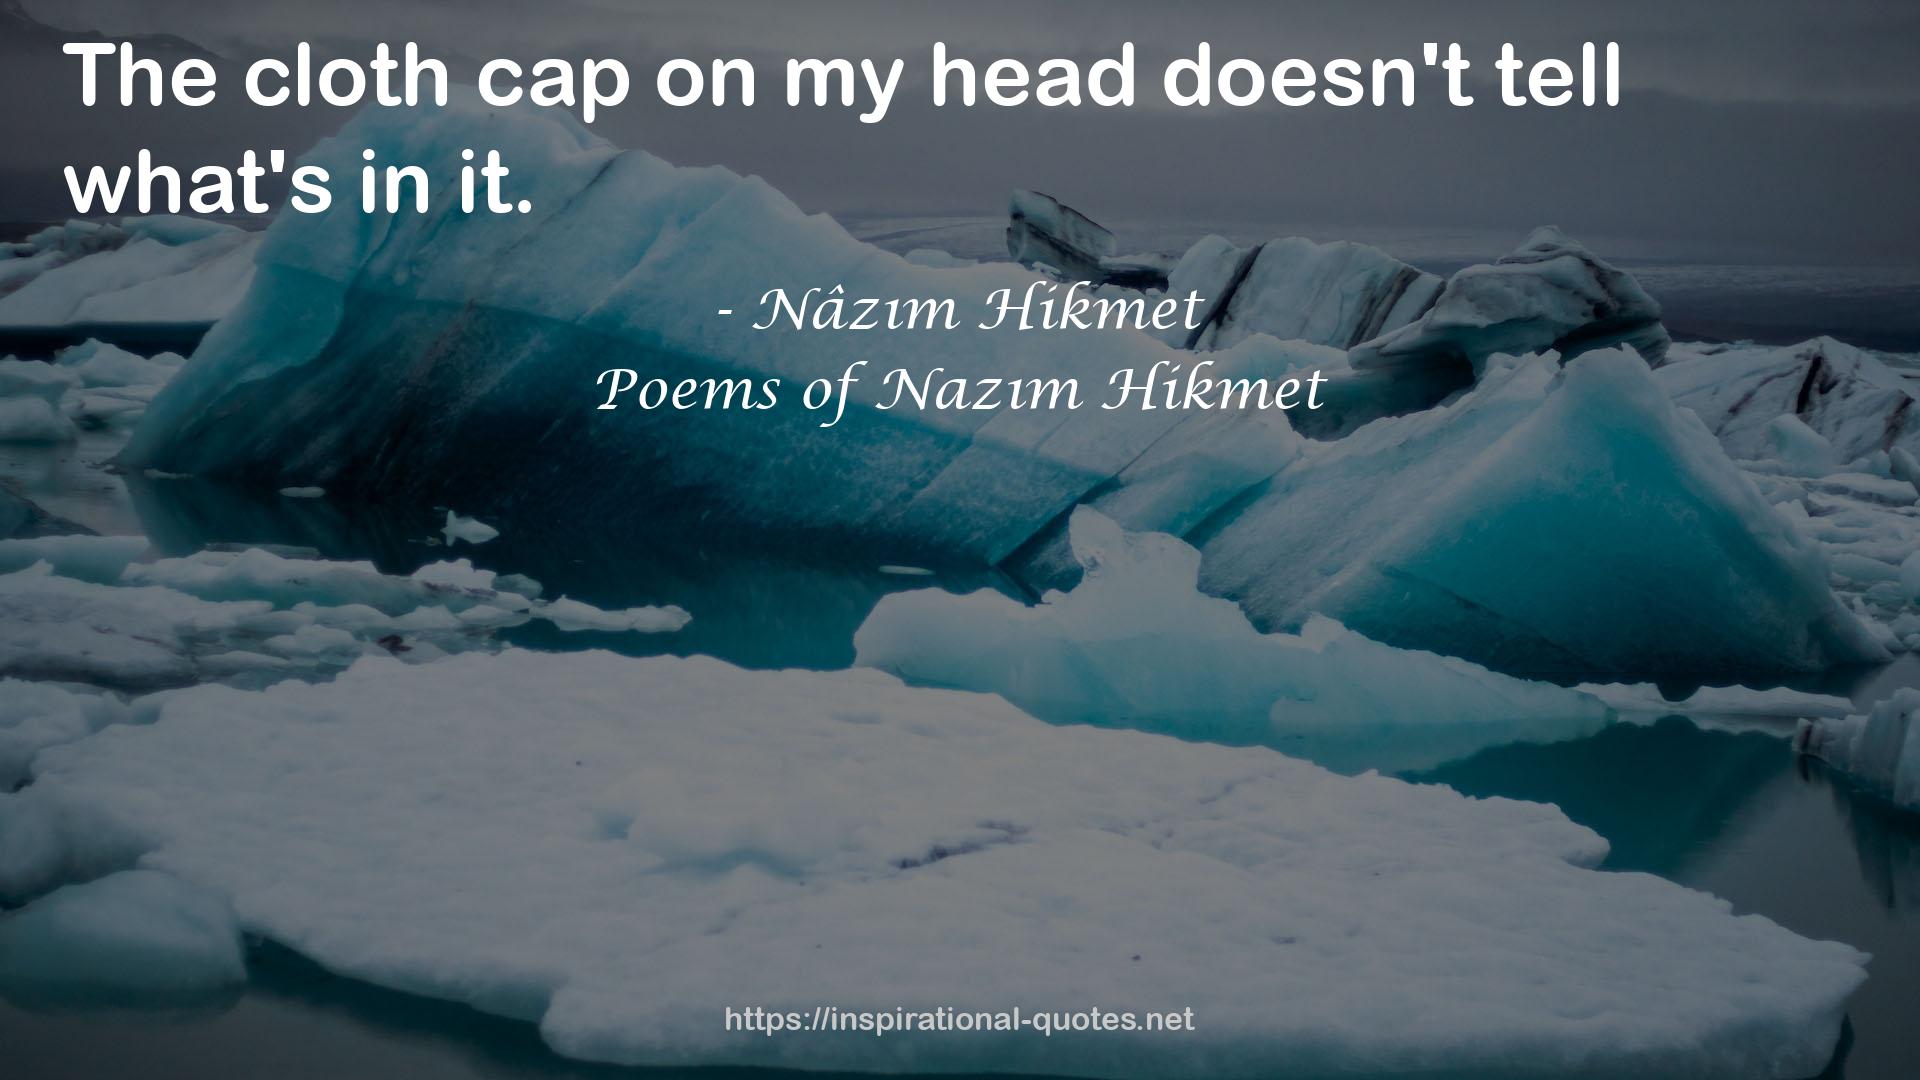 Poems of Nazım Hikmet QUOTES